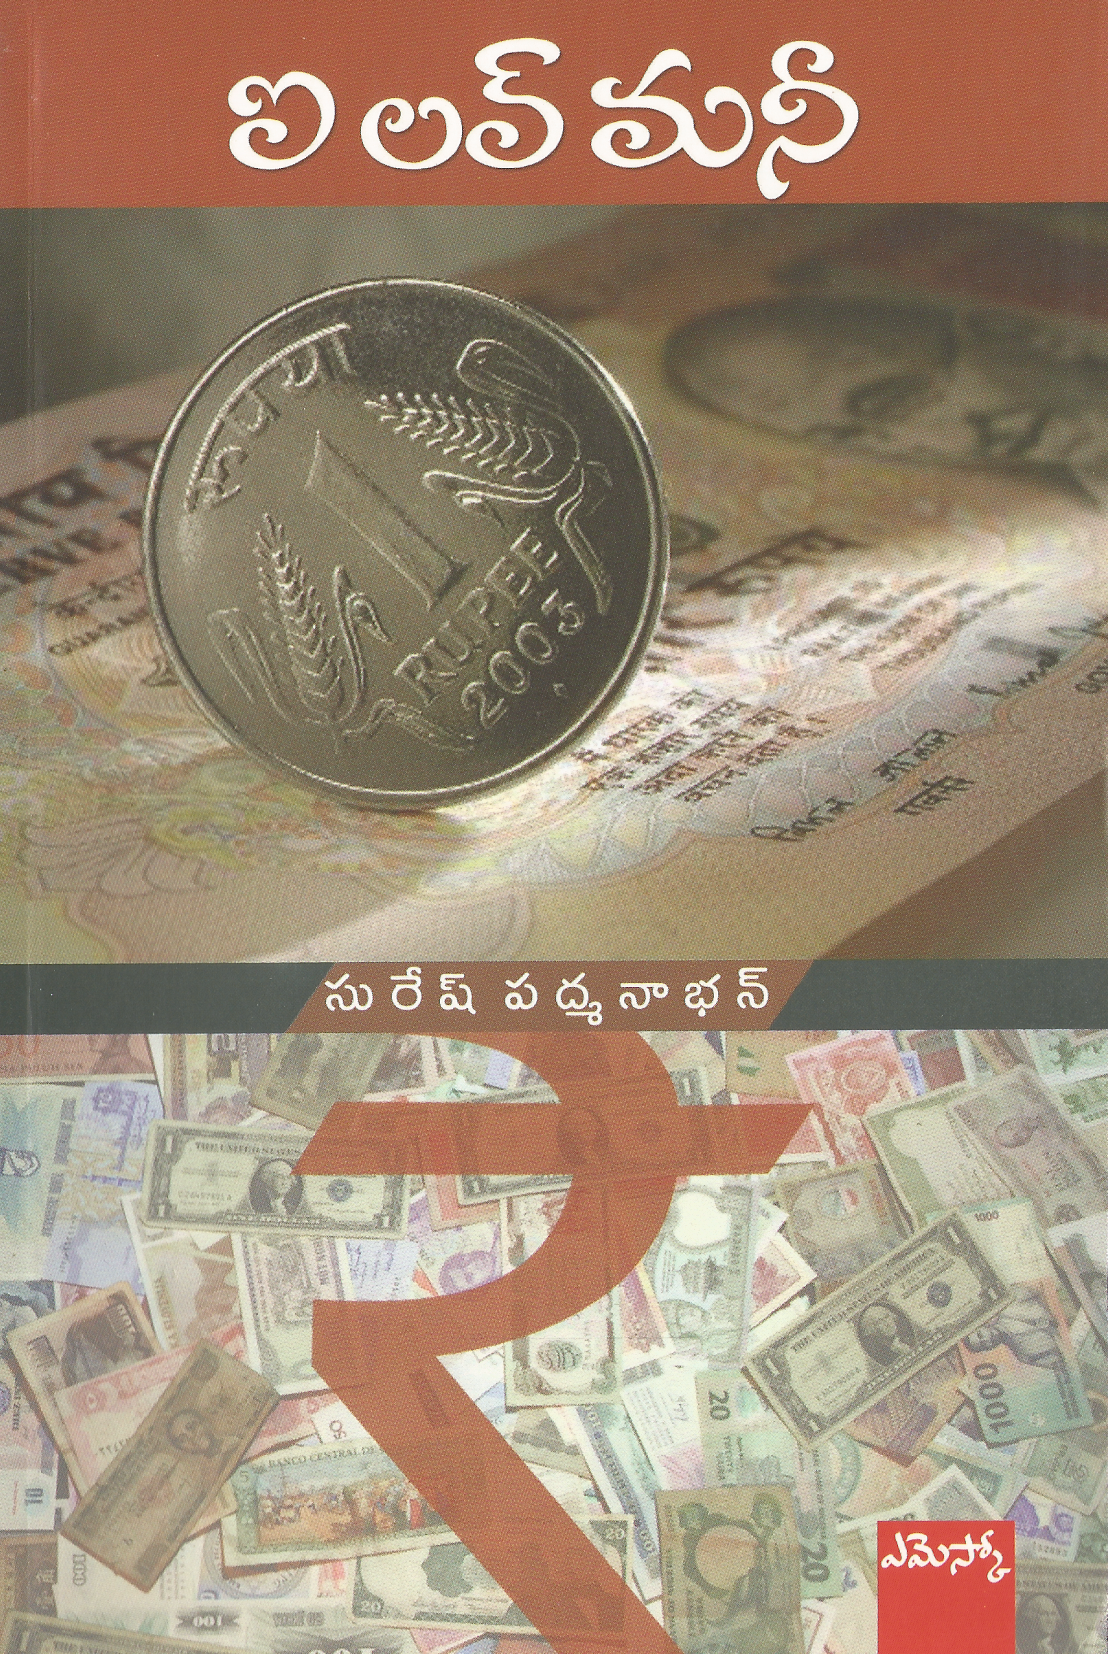 Vastu: Keeping These Things In Your Purse Brings Money And Prosperity|  പേഴ്സിൽ ഈ 4 സാധനങ്ങൾ സൂക്ഷിച്ചുനോക്കൂ.. പണം വന്നുചേരും വരുമാനം കൂടും -  Malayalam Oneindia